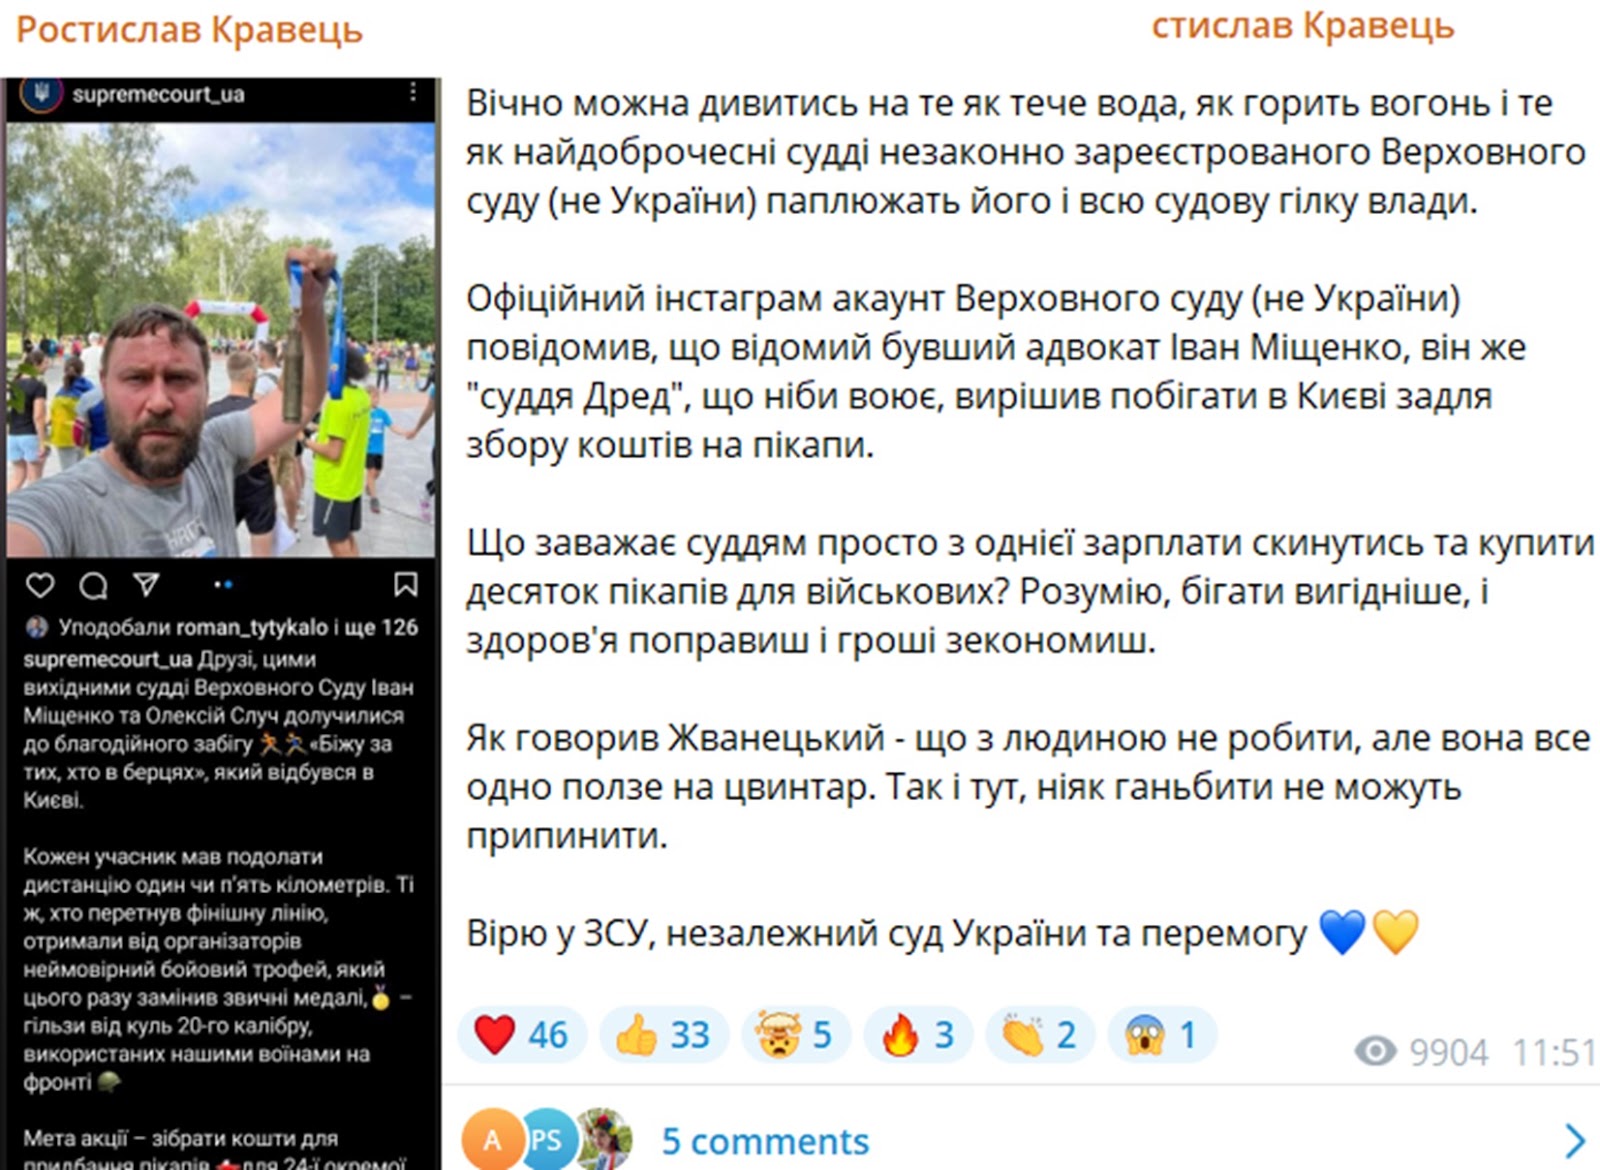 Знімок екрану з Telegram-каналу Ростислава Кравця